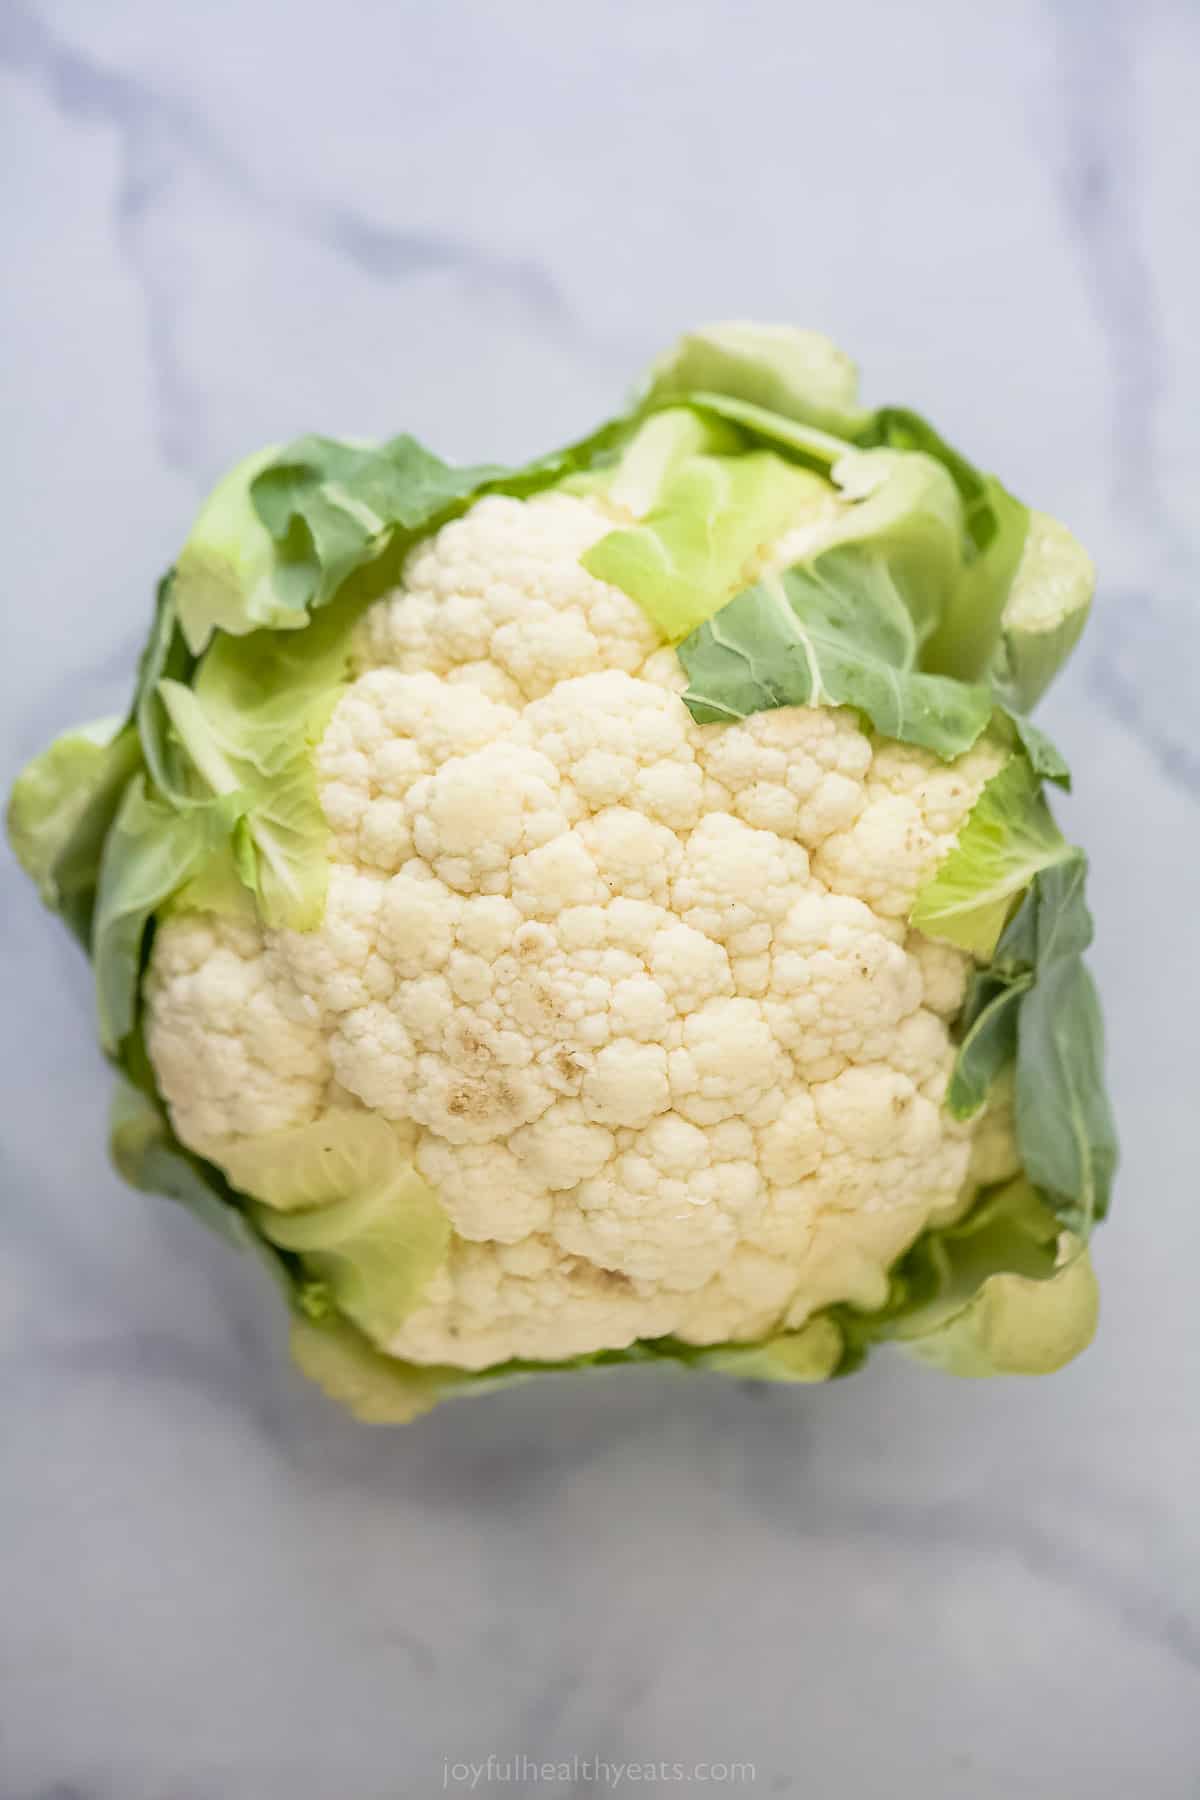 a whole cauliflower